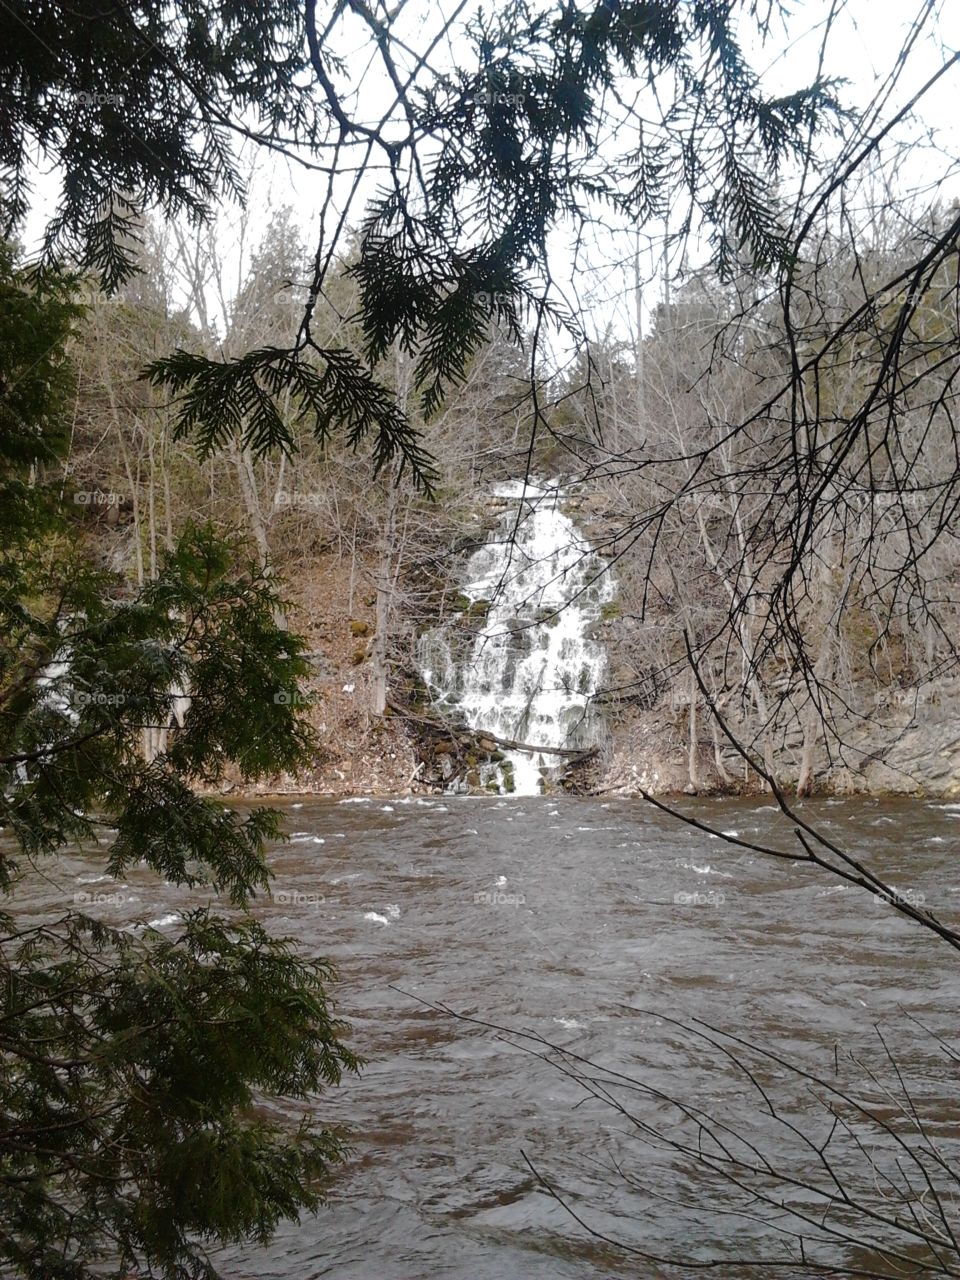 Buttermilk Falls along the Salmon River